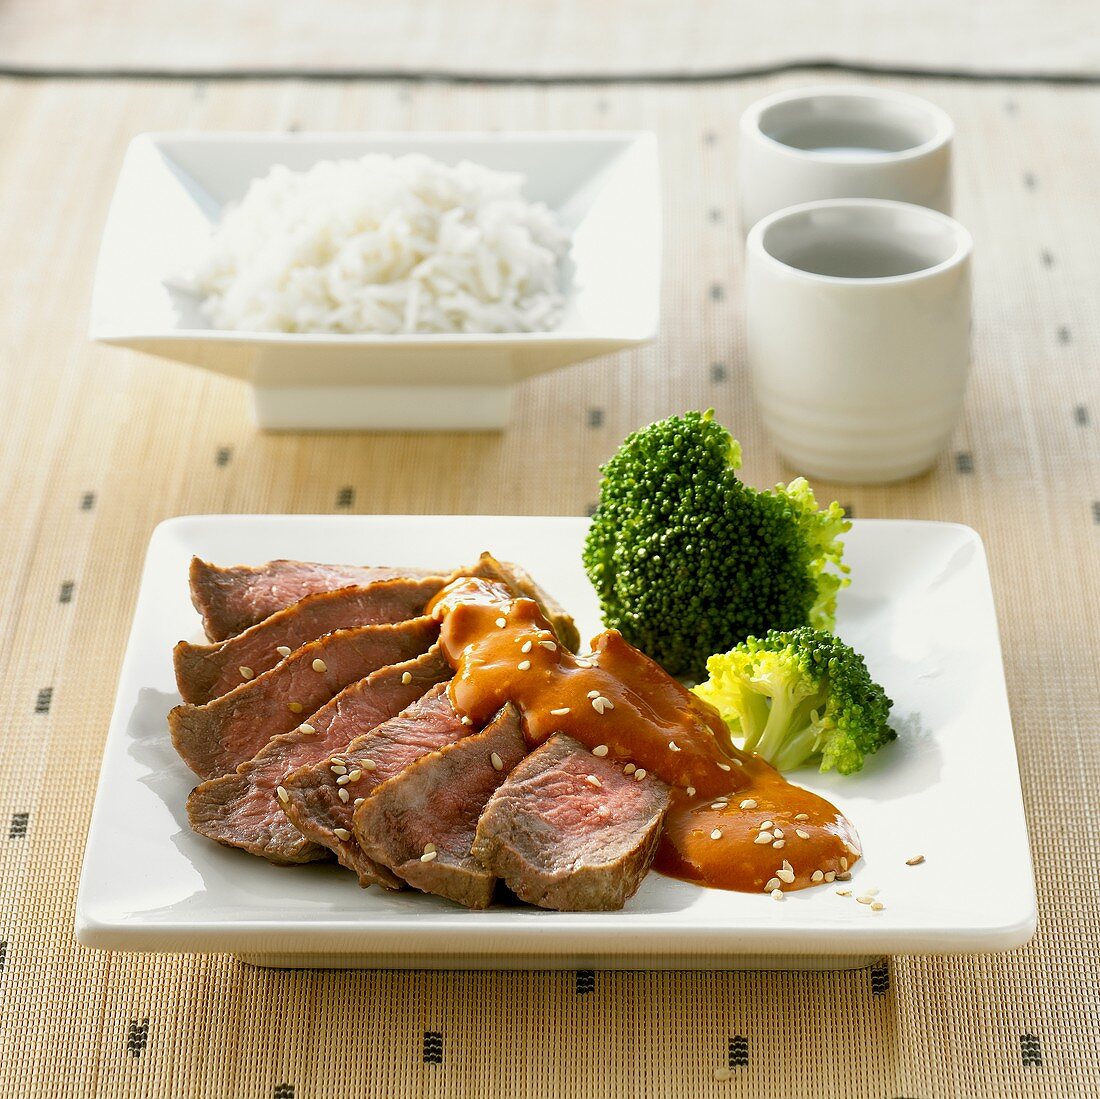 Roast beef with sesame sauce and broccoli (Japan)